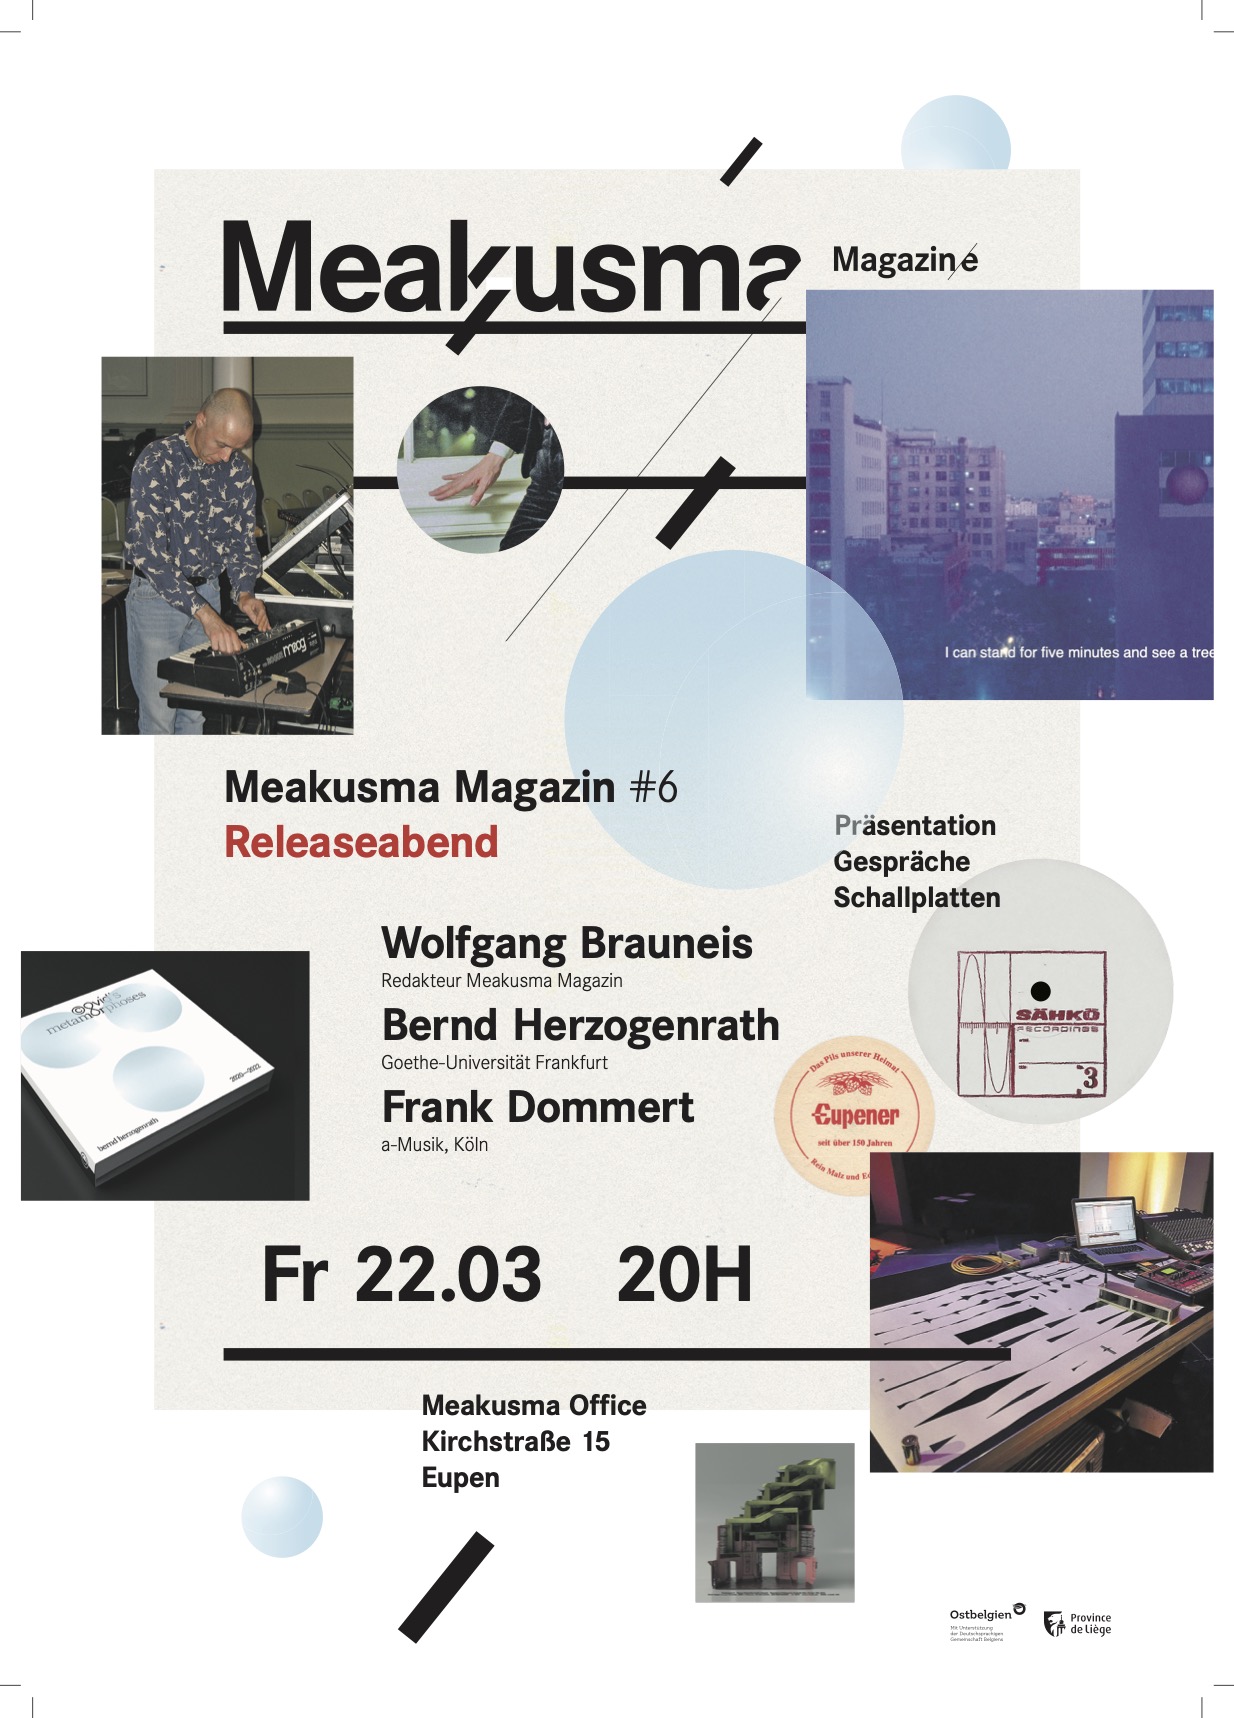 meakusma magazine launch